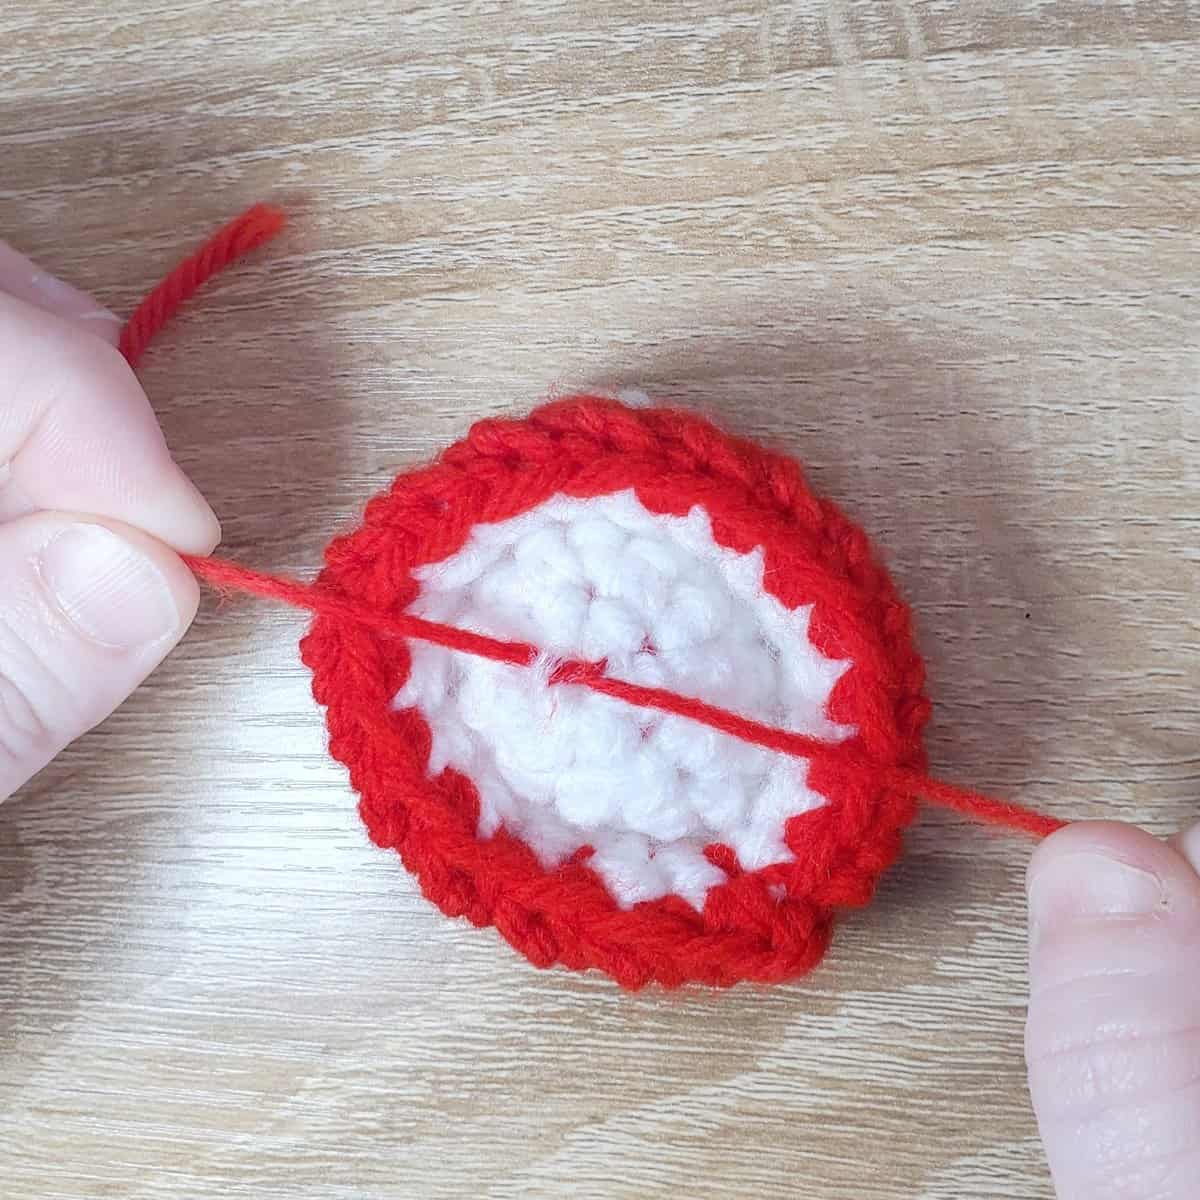 sew long yarn ends 3